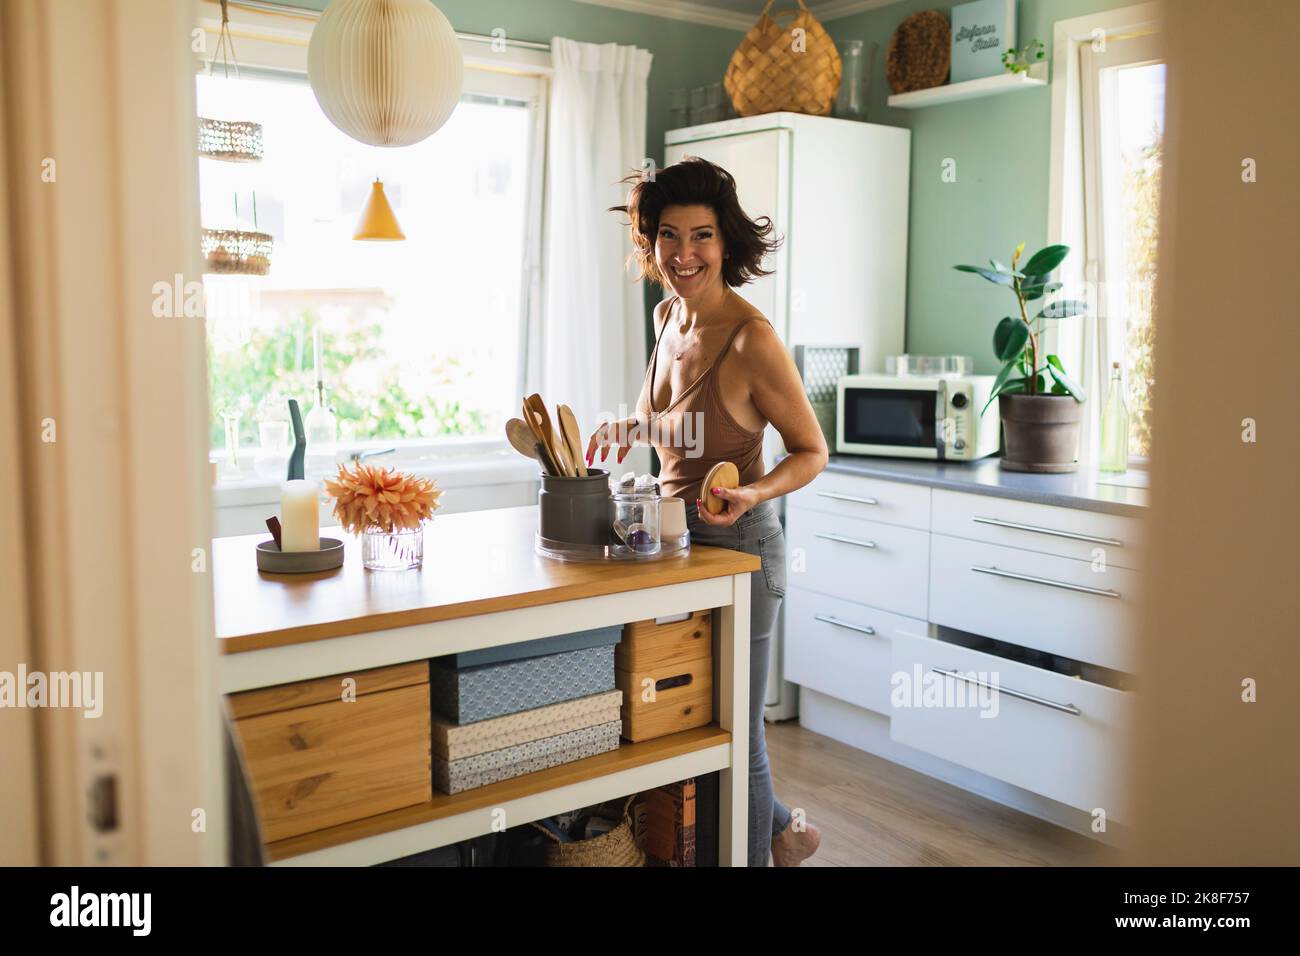 Smiling mature woman at kitchen island Stock Photo